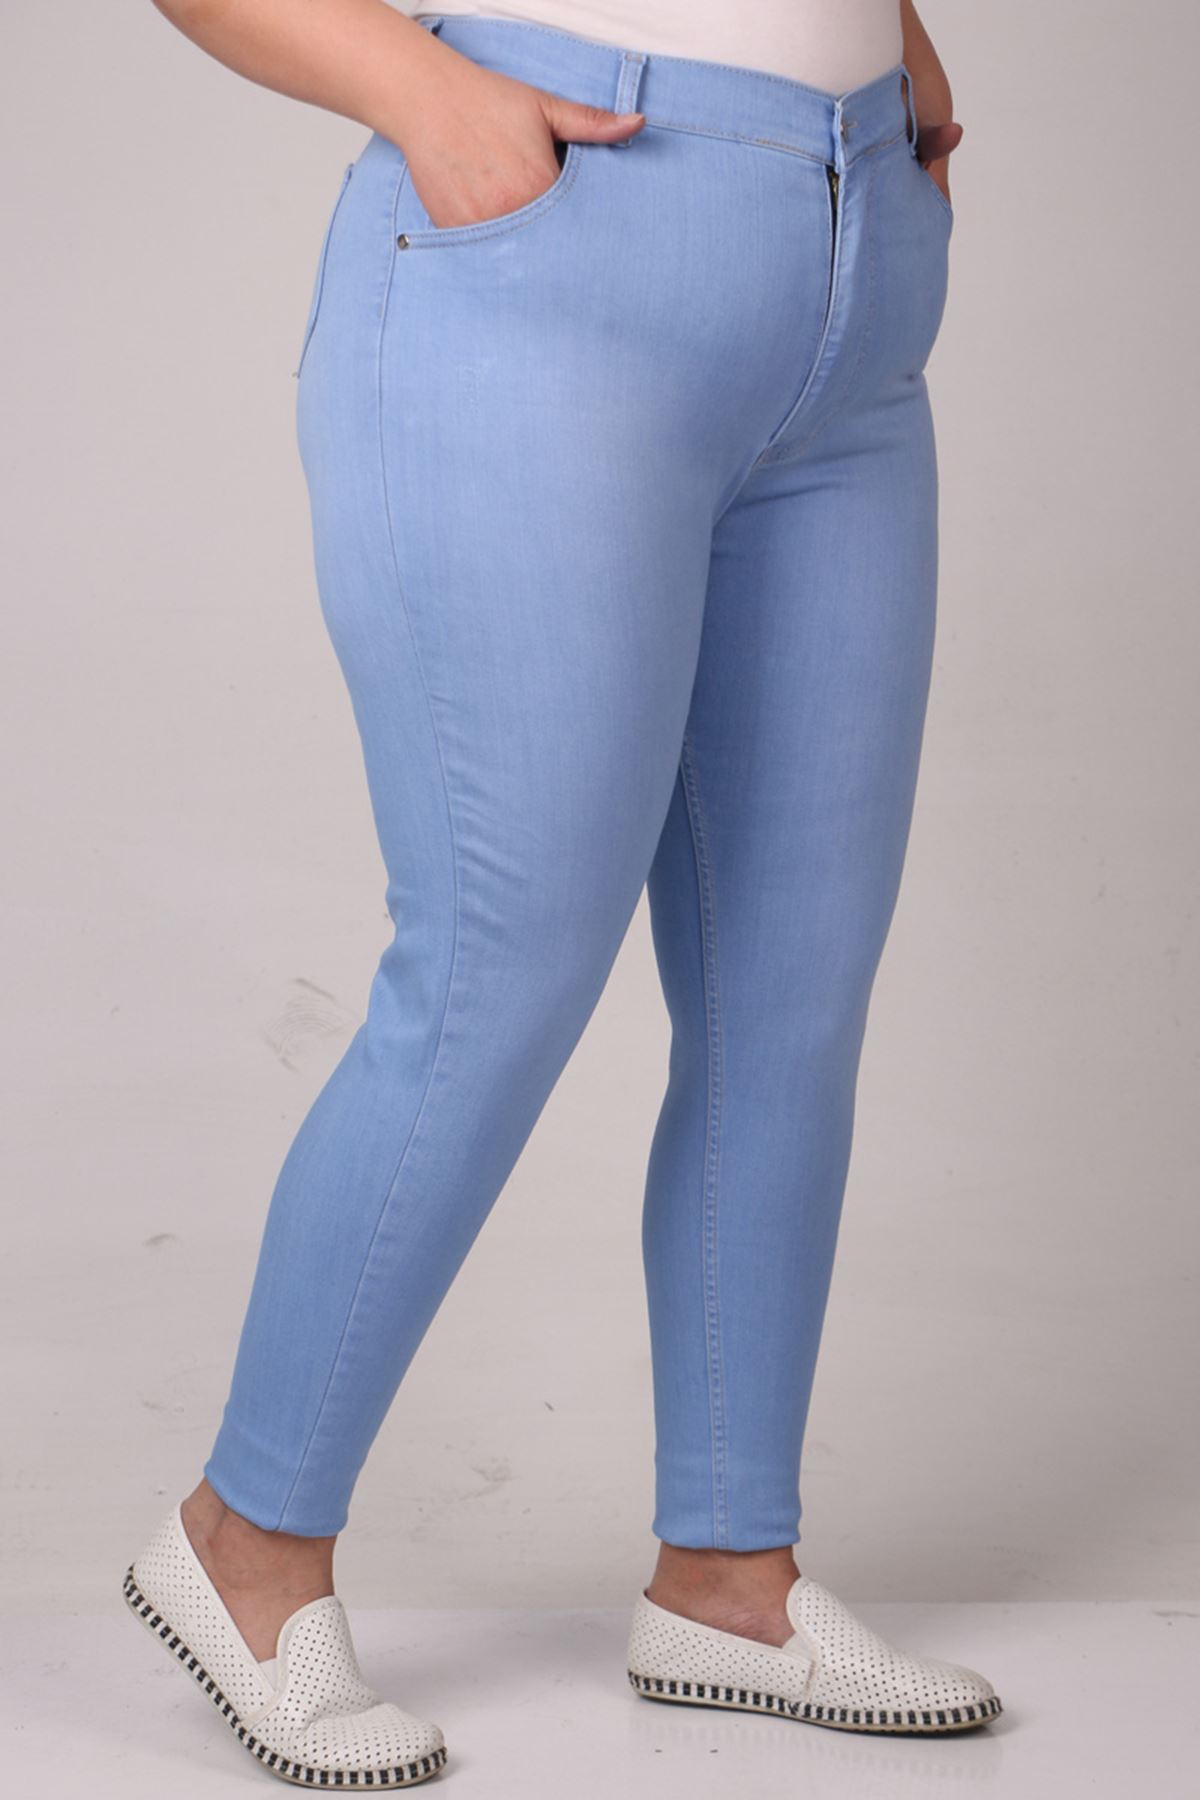 9183-7 Plus Size Slim Leg Long Length Stony Nail Jeans - Ice Blue